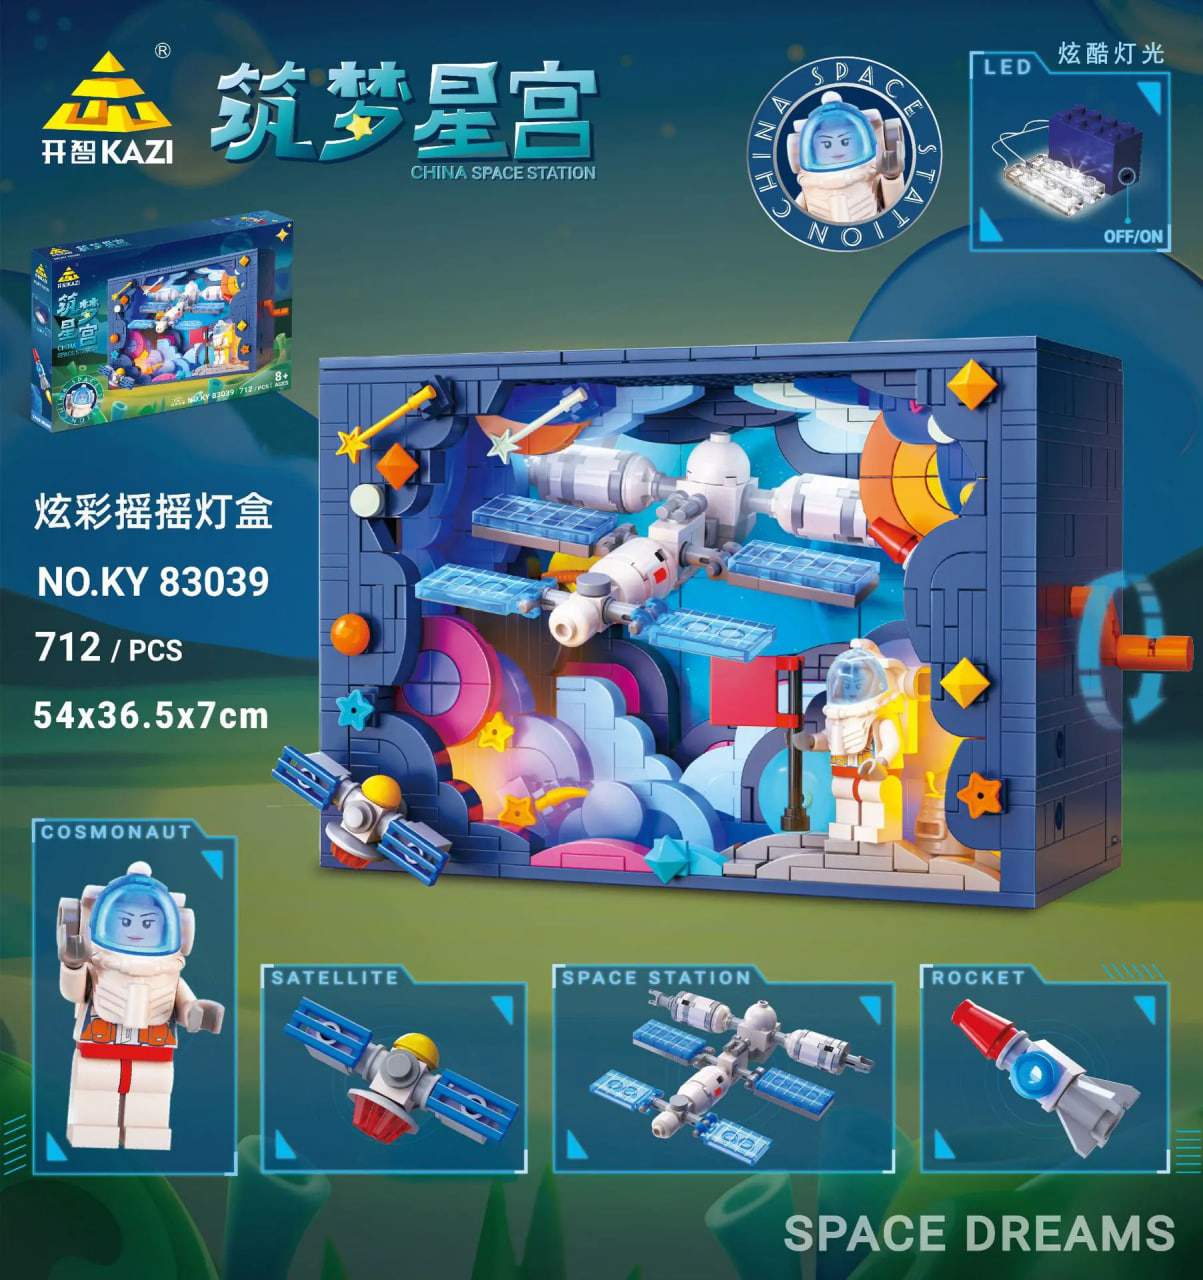 China Space Station KAZI KY83039 1